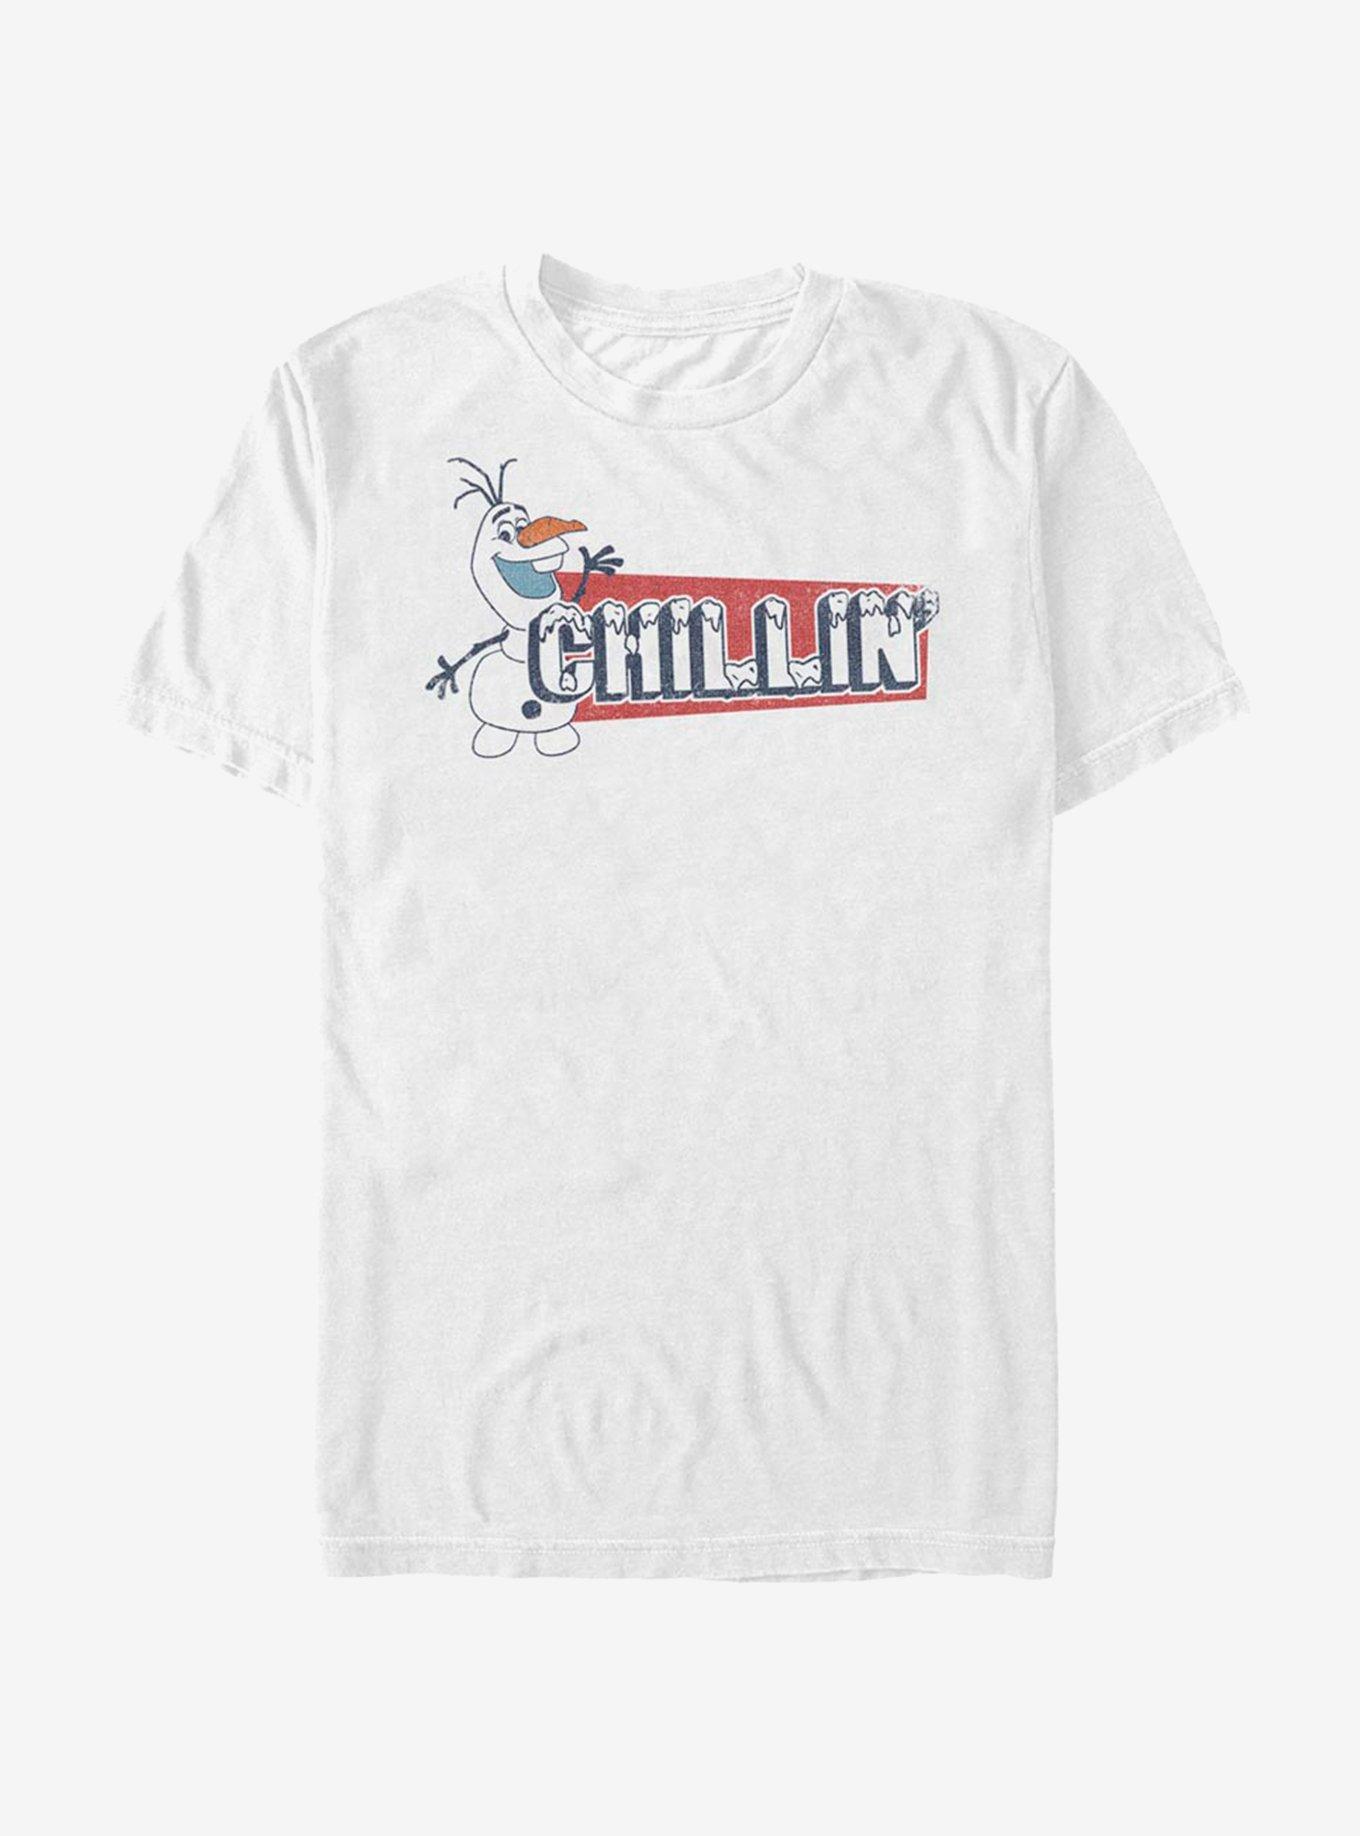 Disney Frozen Olaf Chillin T-Shirt, WHITE, hi-res